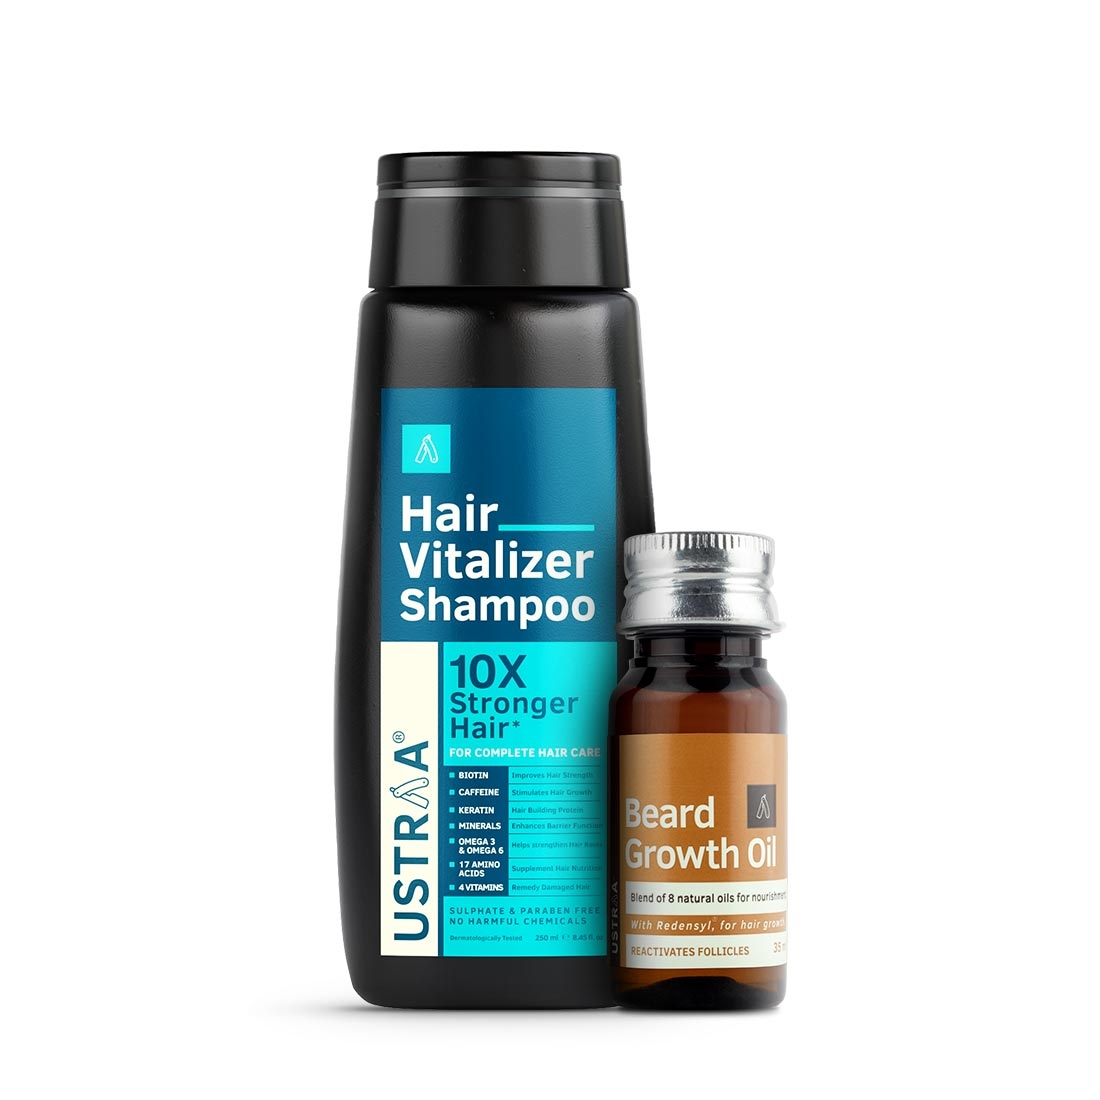 Ustraa Hair Vitalizer Shampoo - 250ml & Beard growth Oil - 35ml